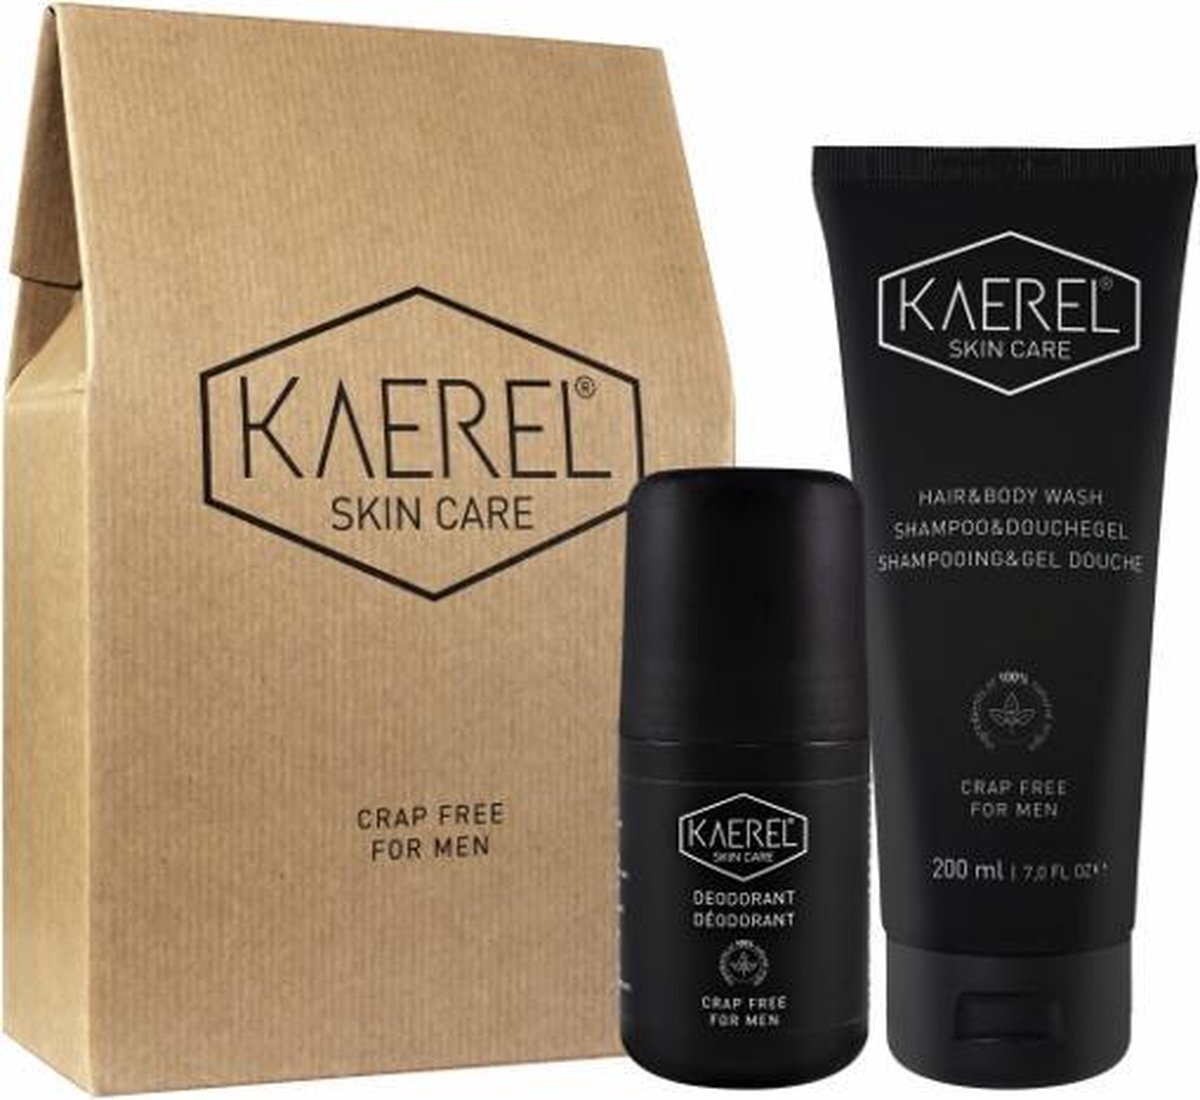 Kaerel Skin Care Kaerel giftset (shampoo + douchegel + deodorant) - Voor mannen